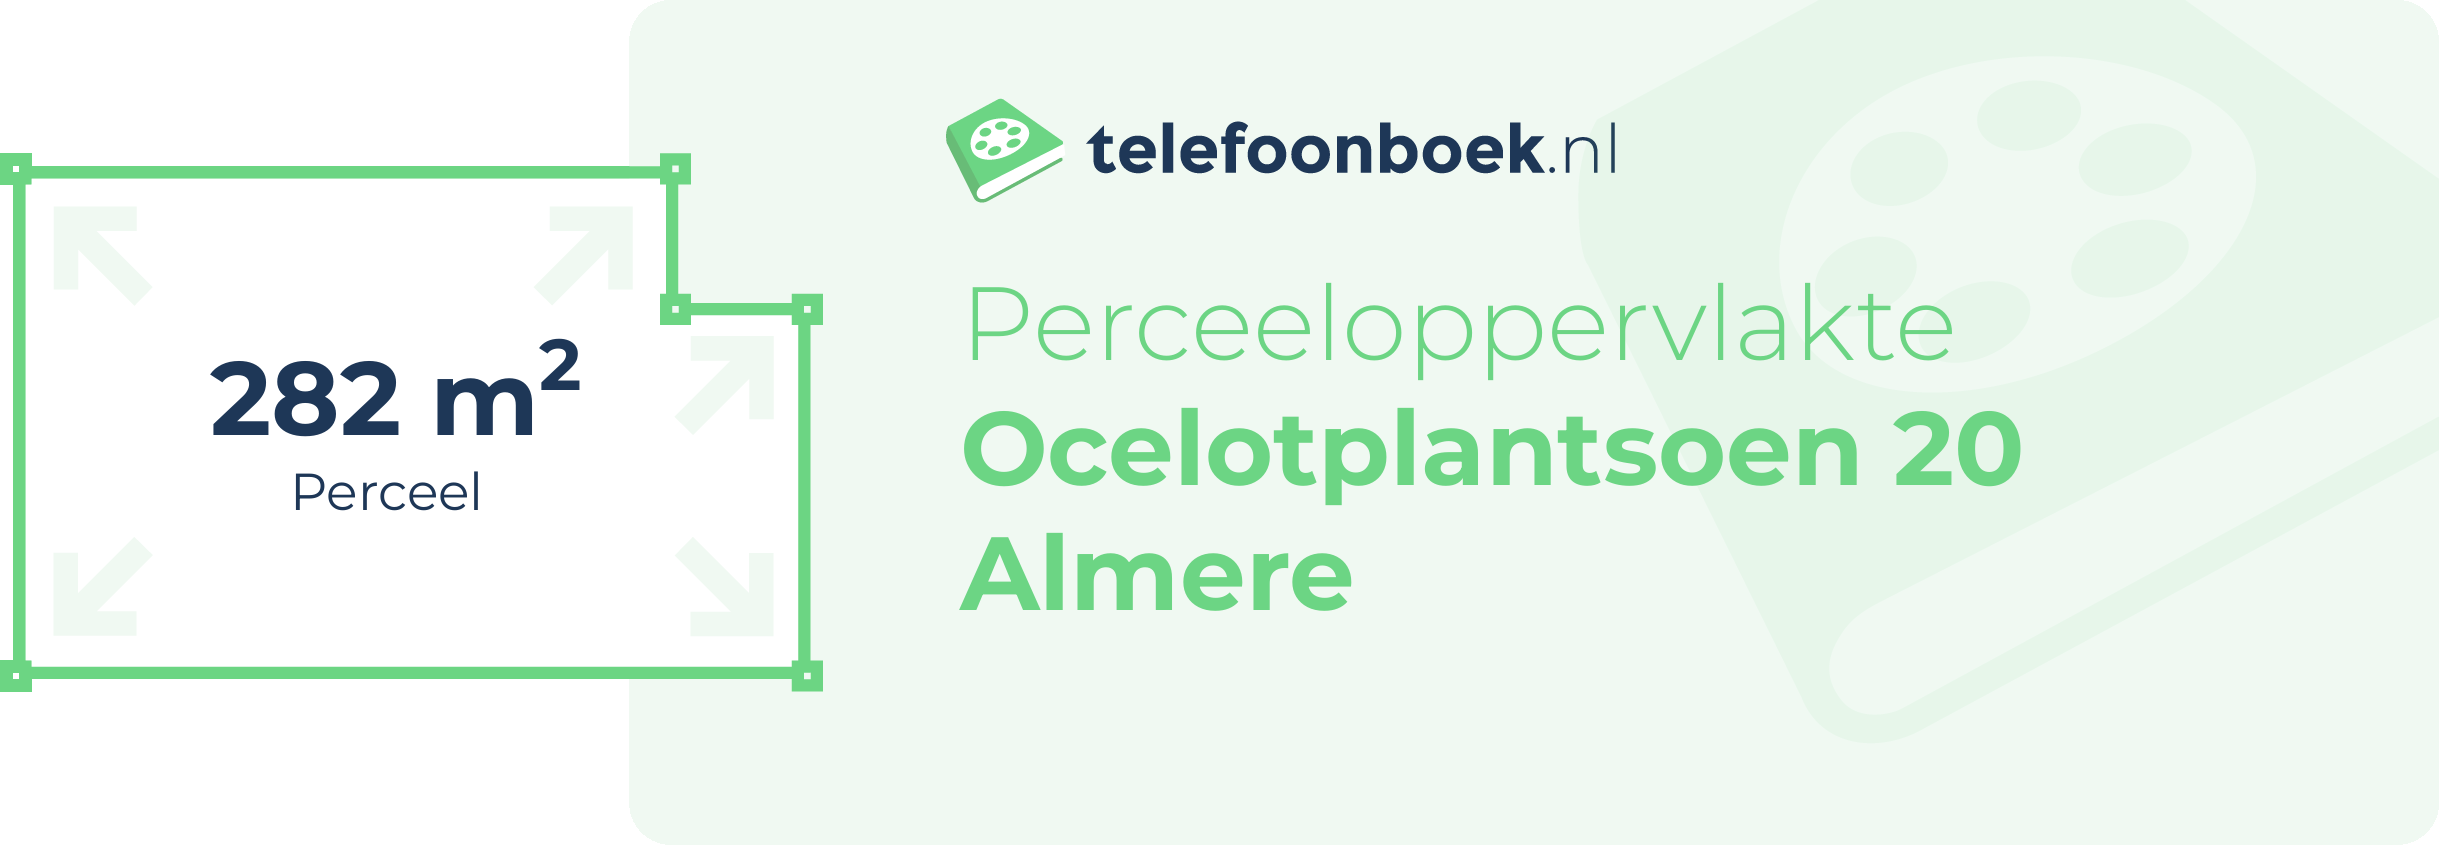 Perceeloppervlakte Ocelotplantsoen 20 Almere